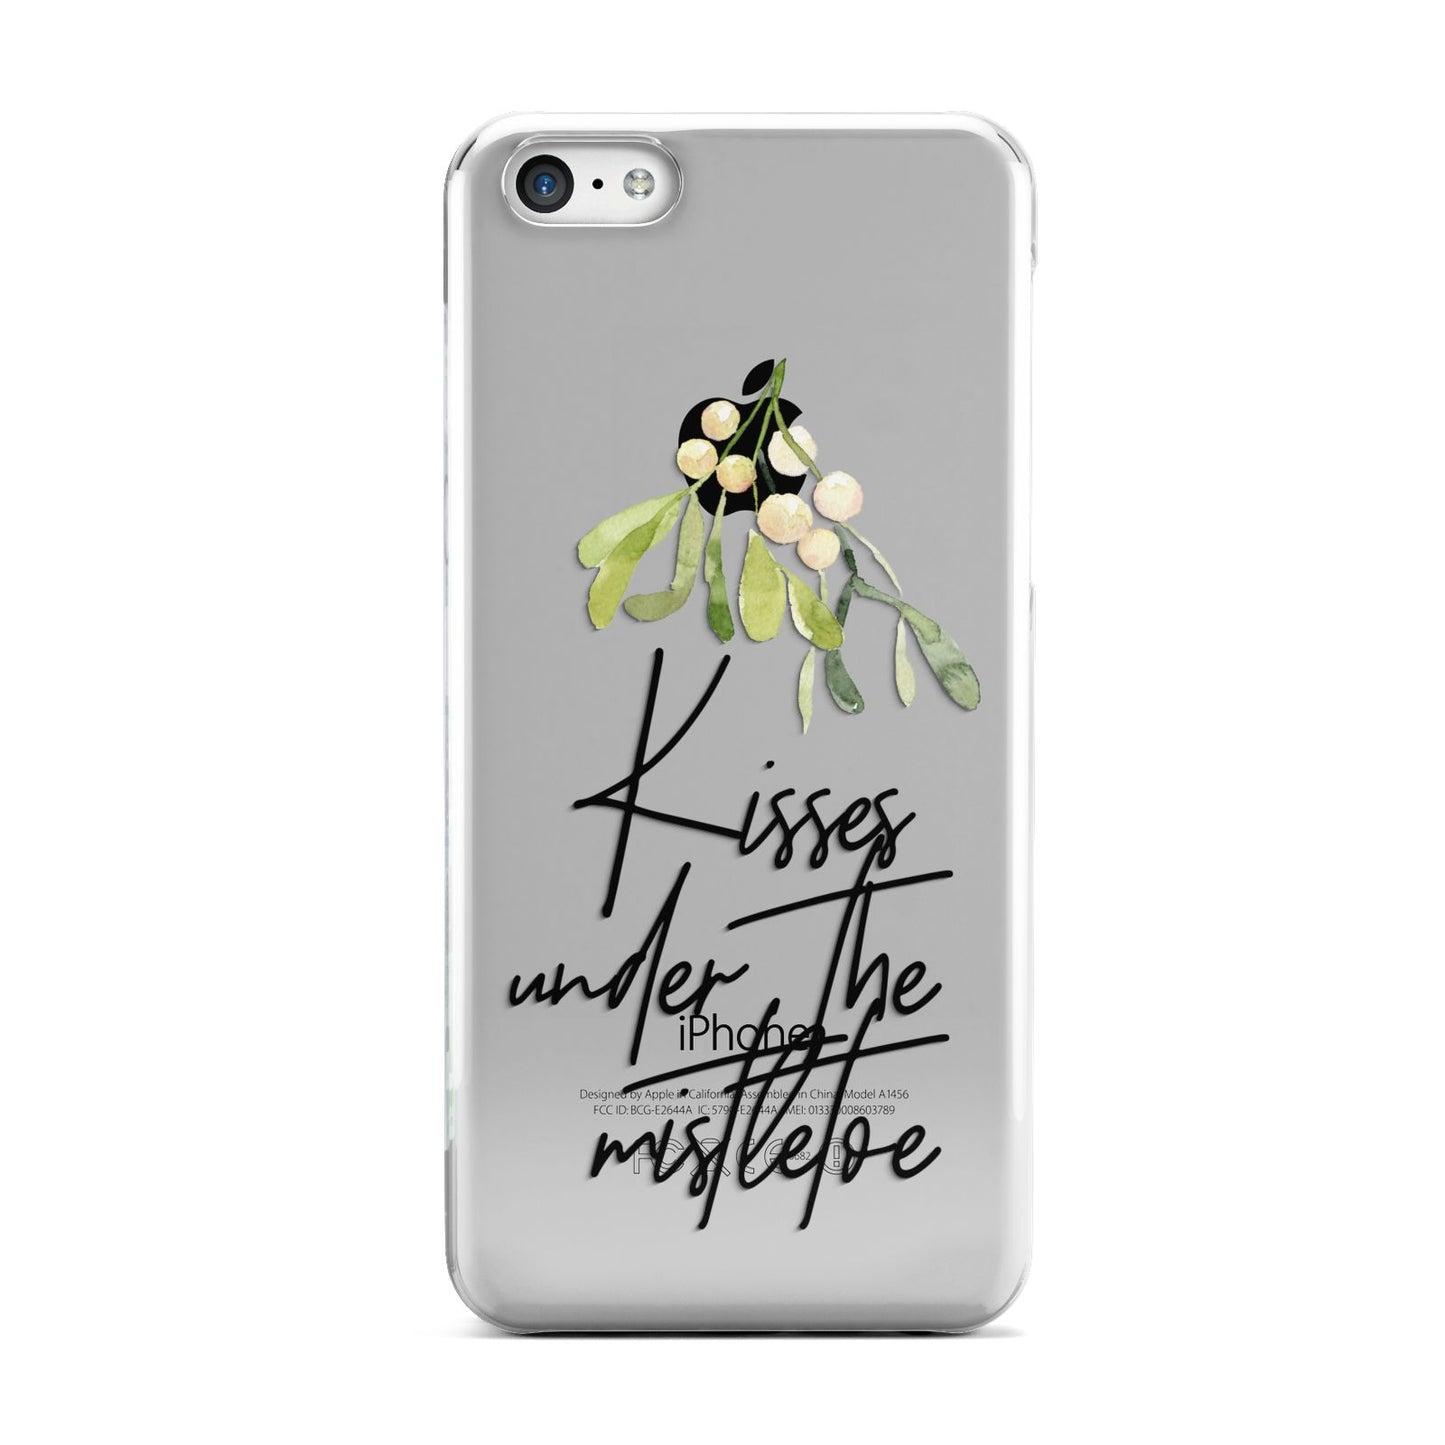 Kisses Under The Mistletoe Apple iPhone 5c Case